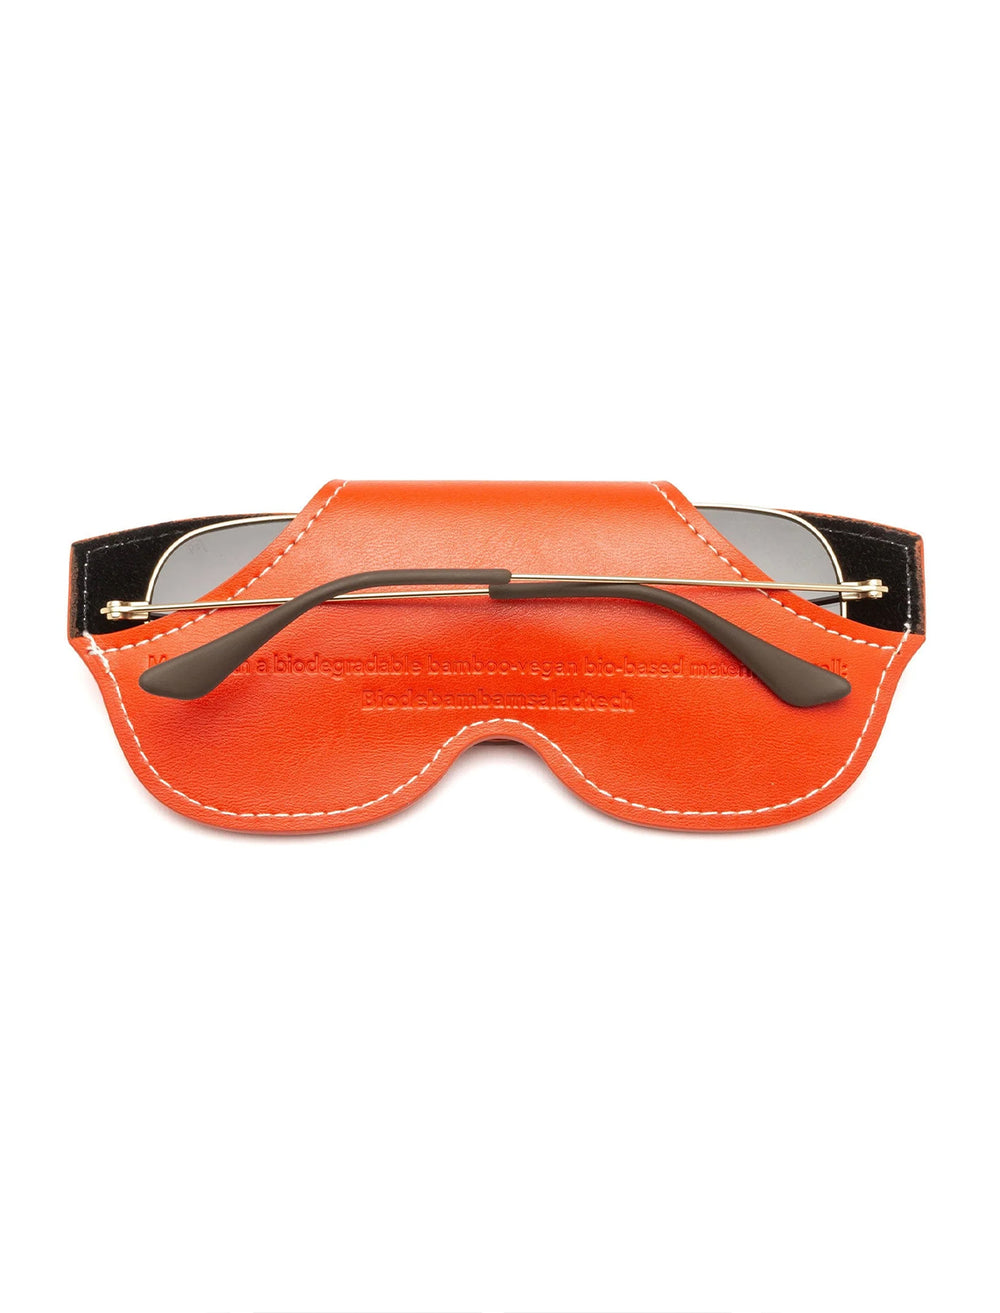 Back view of Caddis' net fit eyeware case in vermillion.